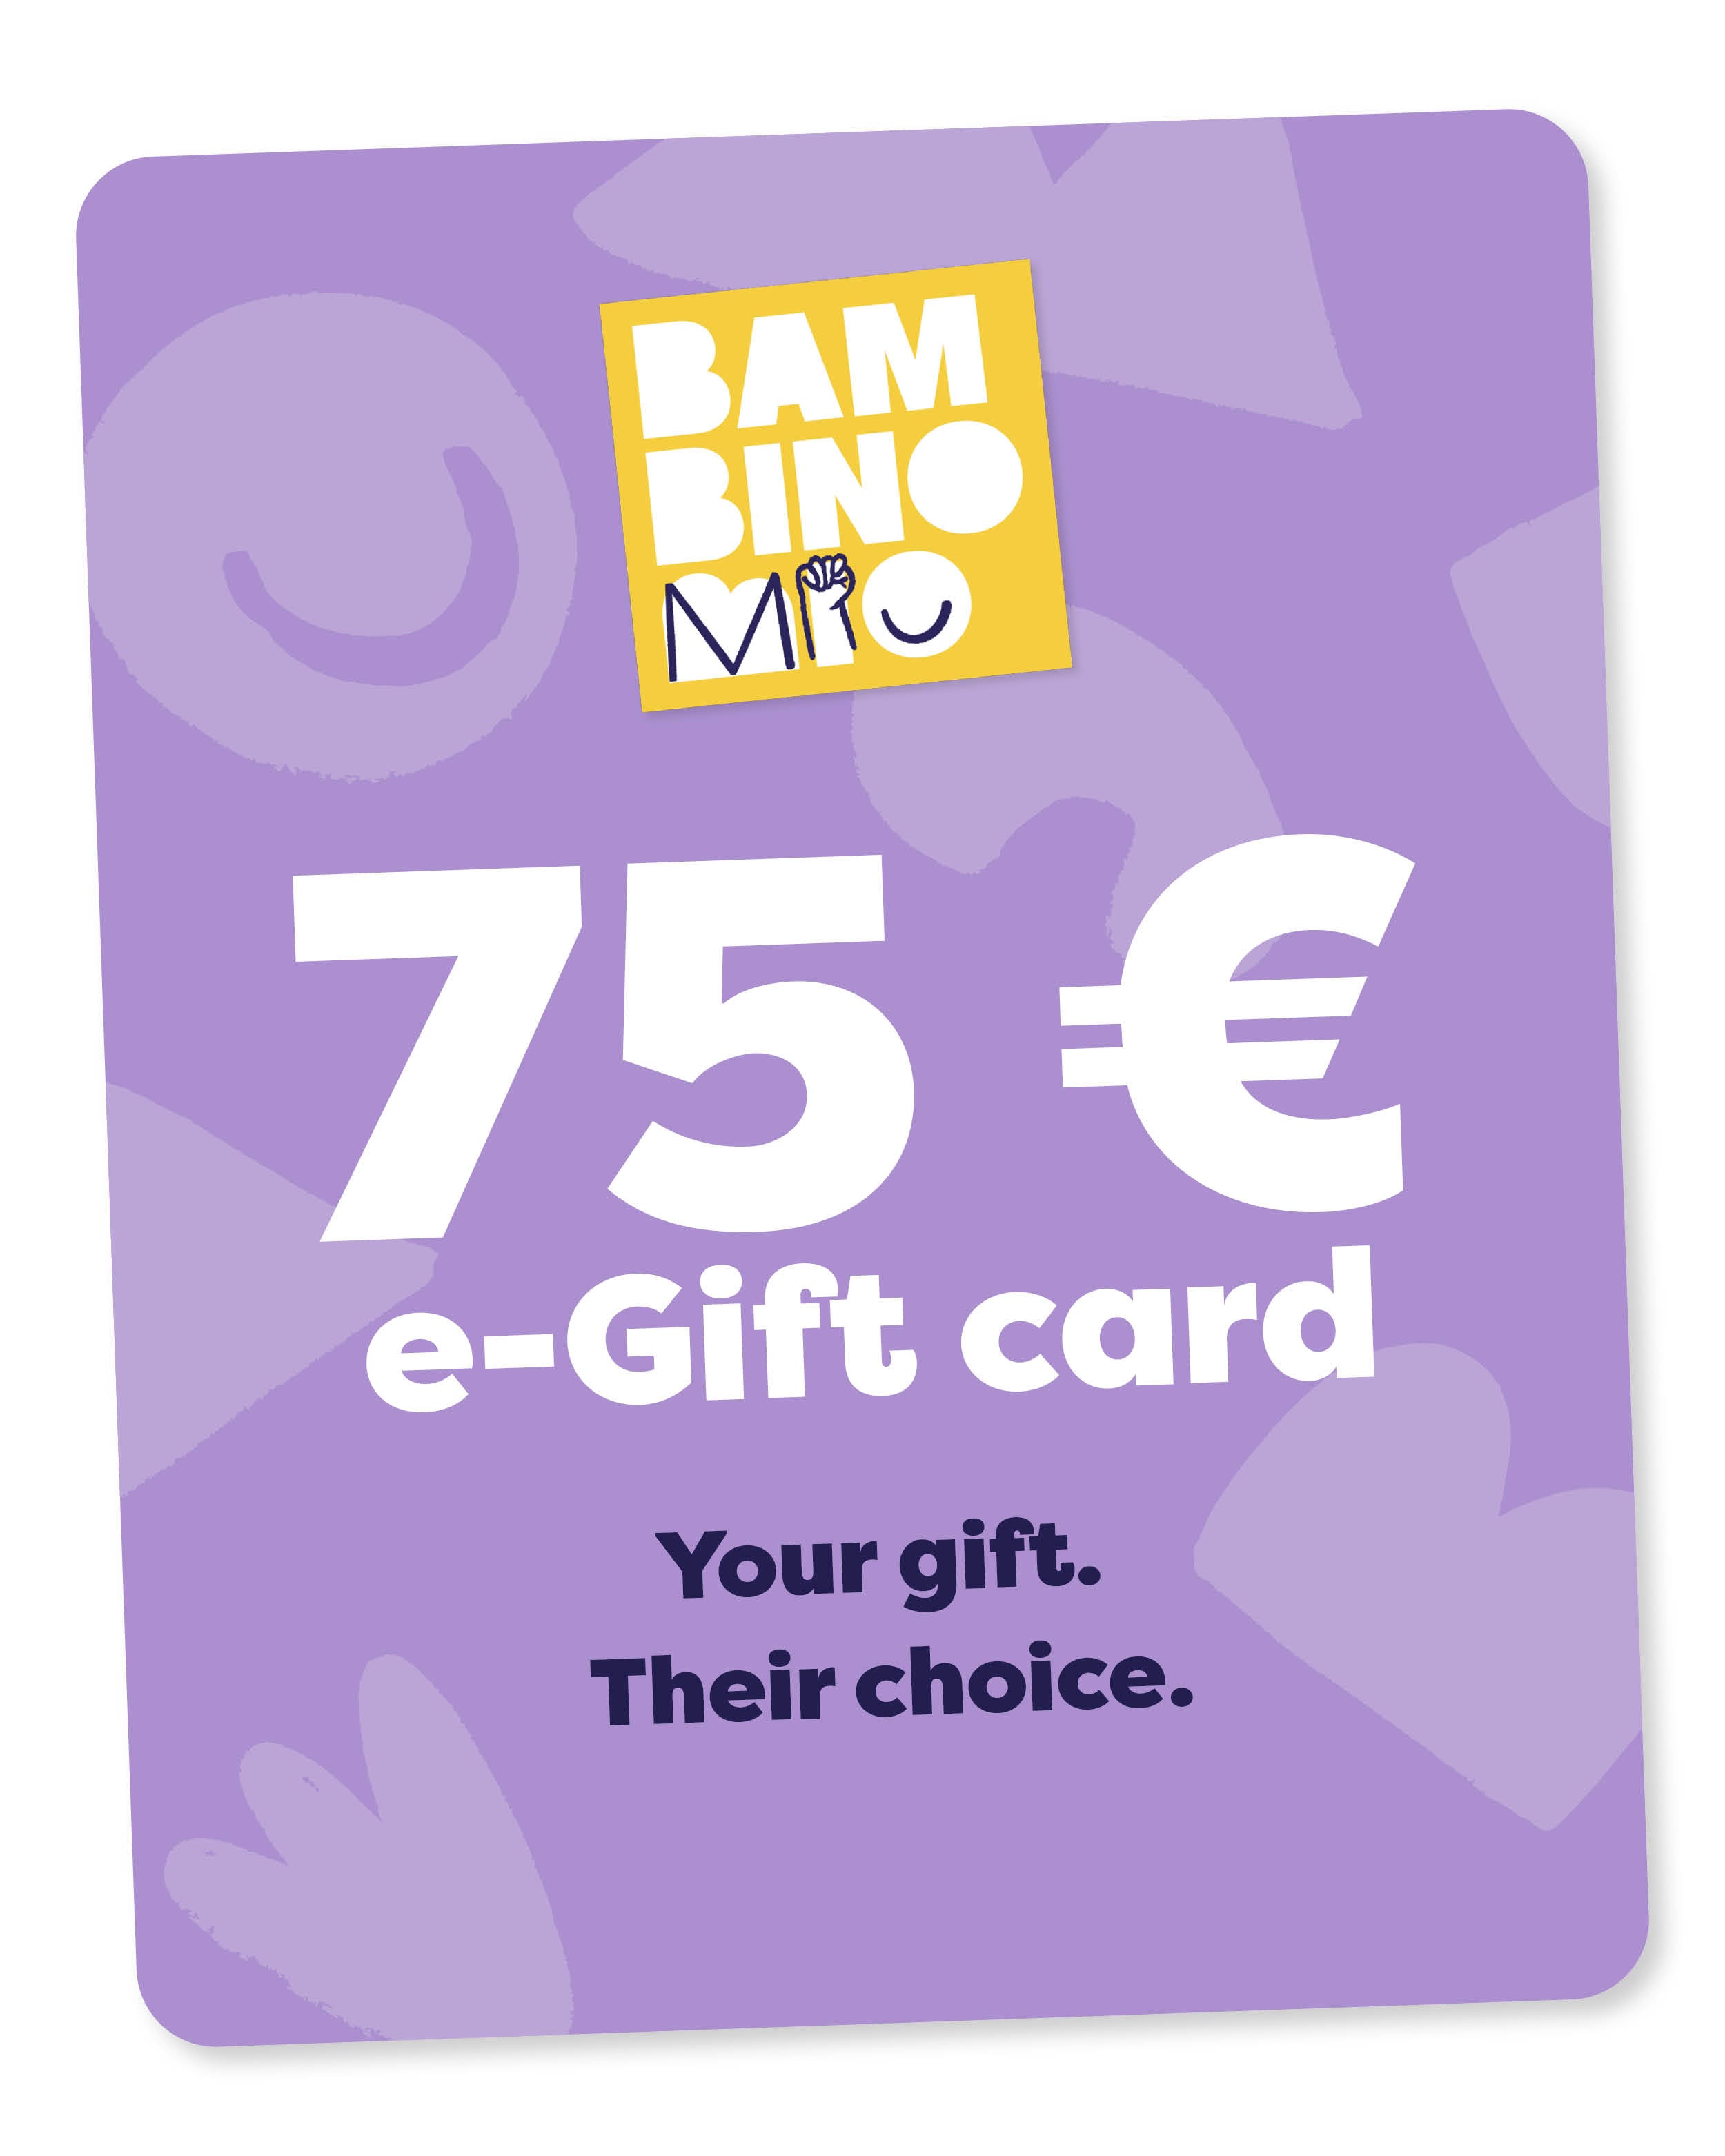 Bambino Mio e-gift card - Bambino Mio (EU)